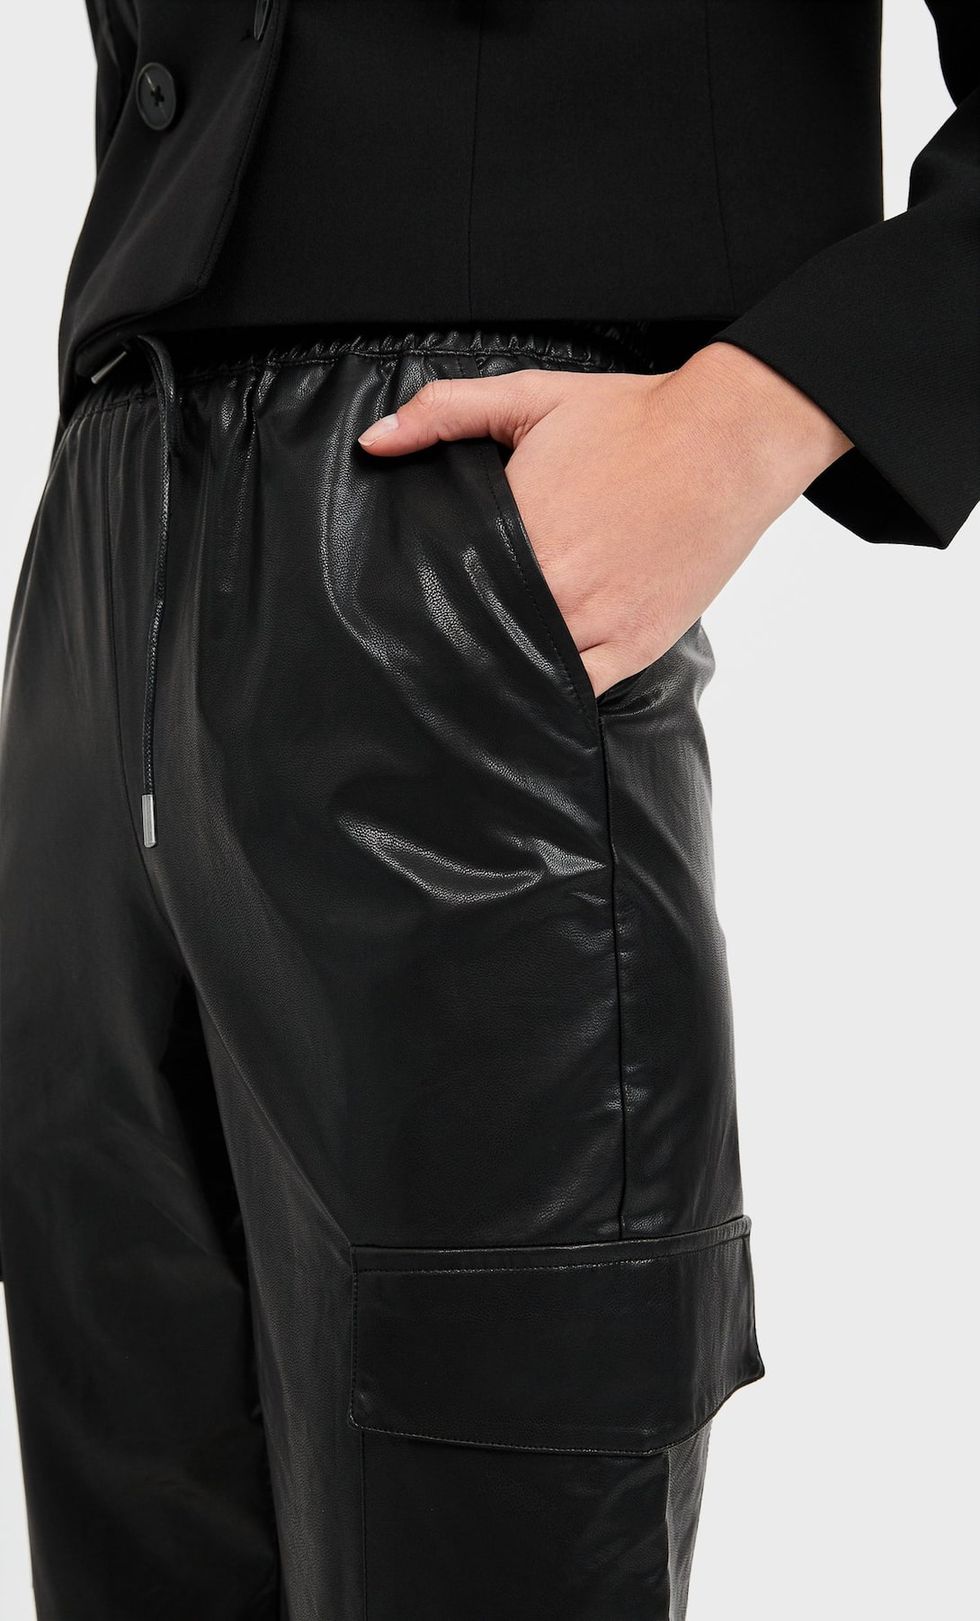 pantaloni donna moda 2020 pelle stradivarius